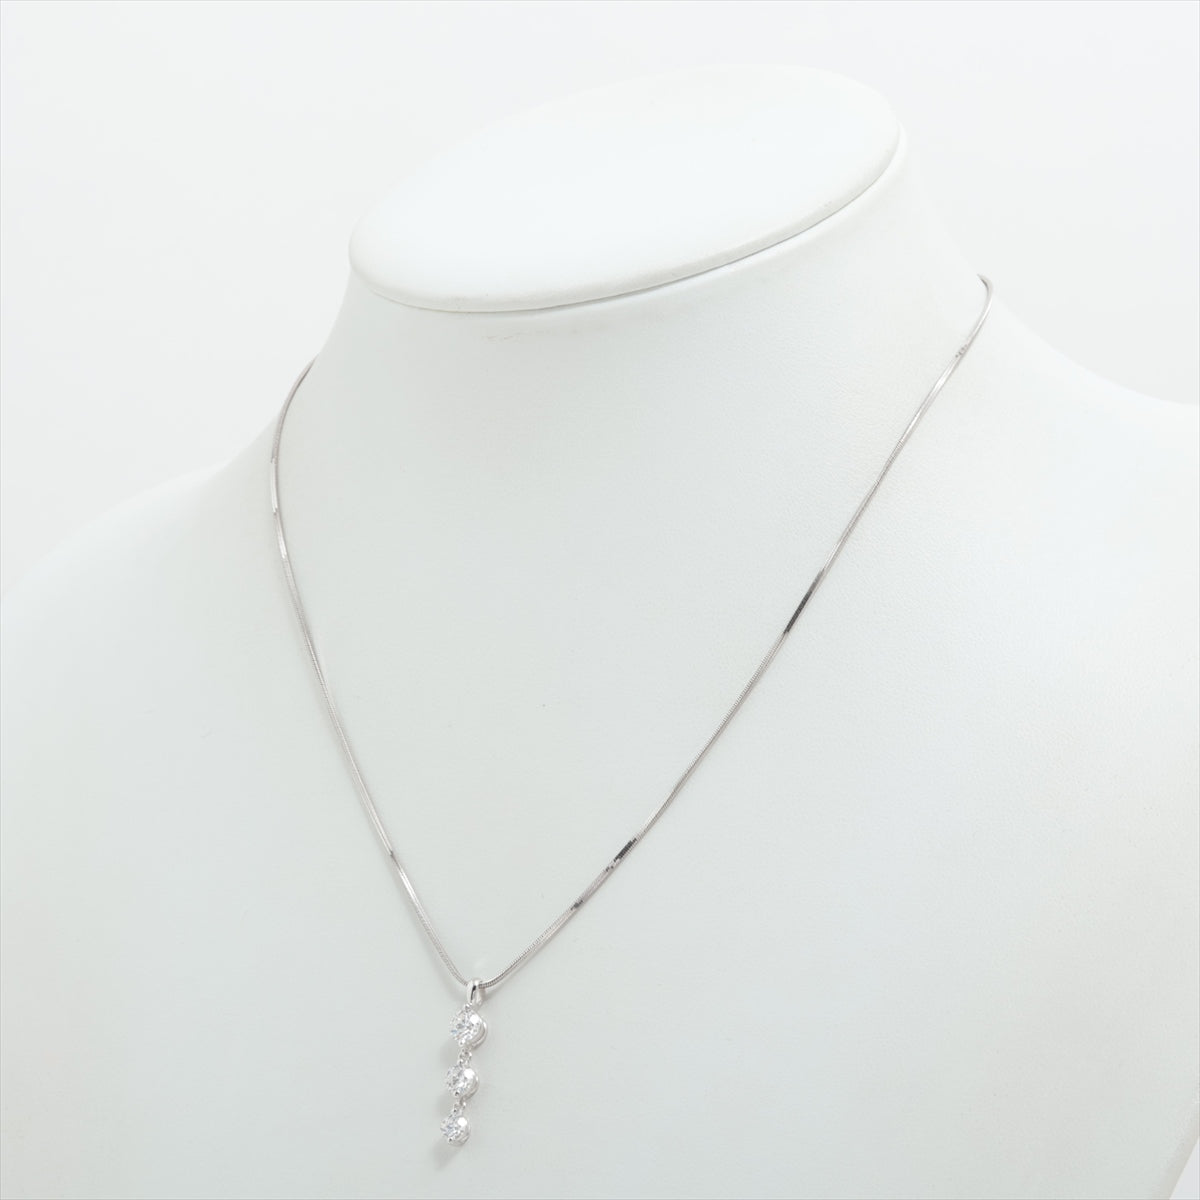 TASAKI diamond Necklace Pt900×Pt850 6.2g 1.00 No chain brand engraved